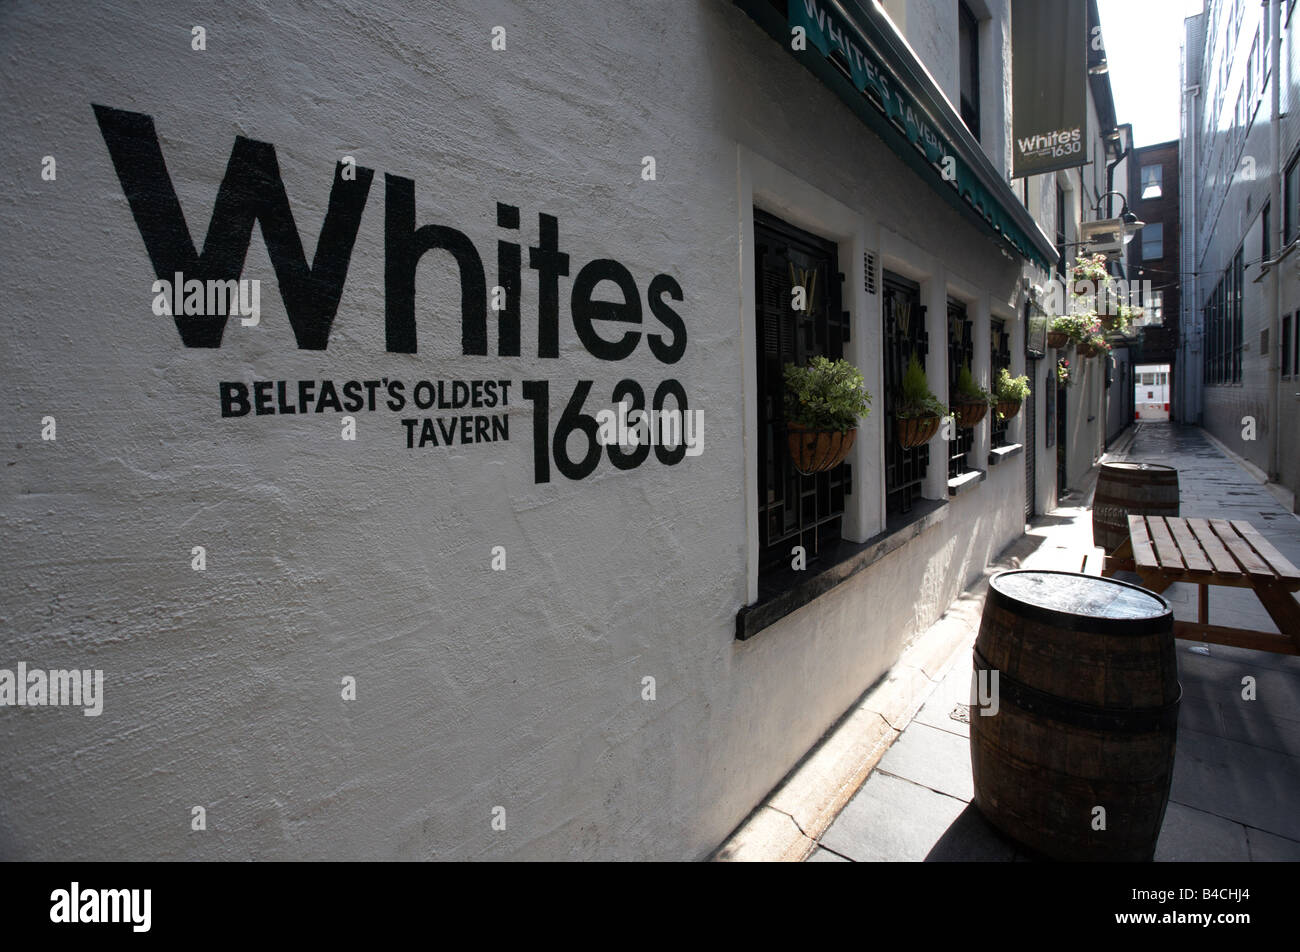 Whites Tavern Belfasts oldest tavern established in 1630 belfast city centre northern ireland uk Stock Photo